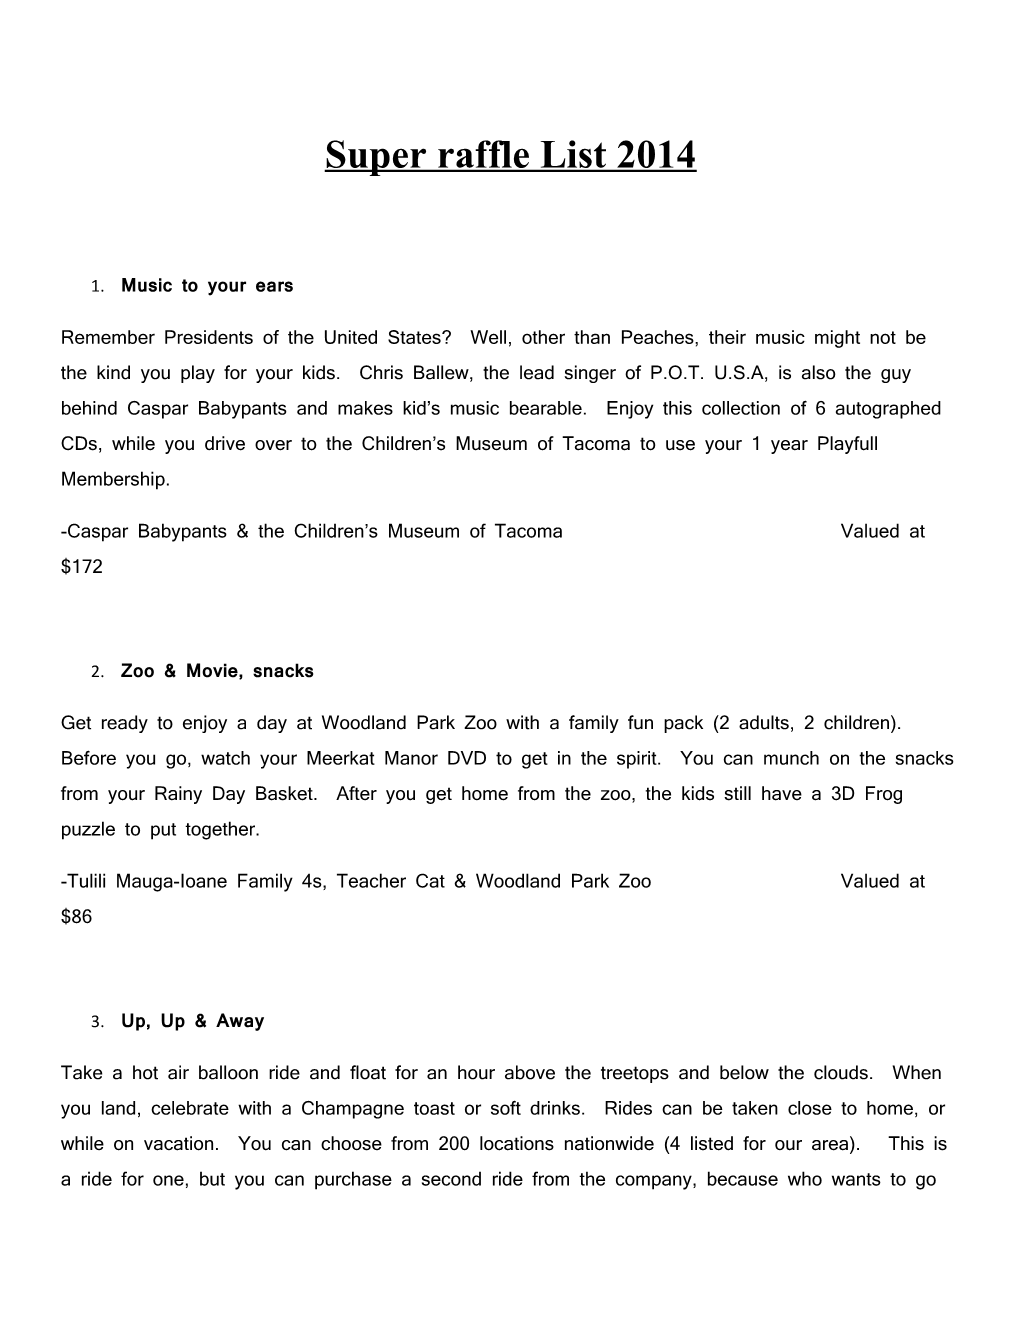 Super Raffle List 2014